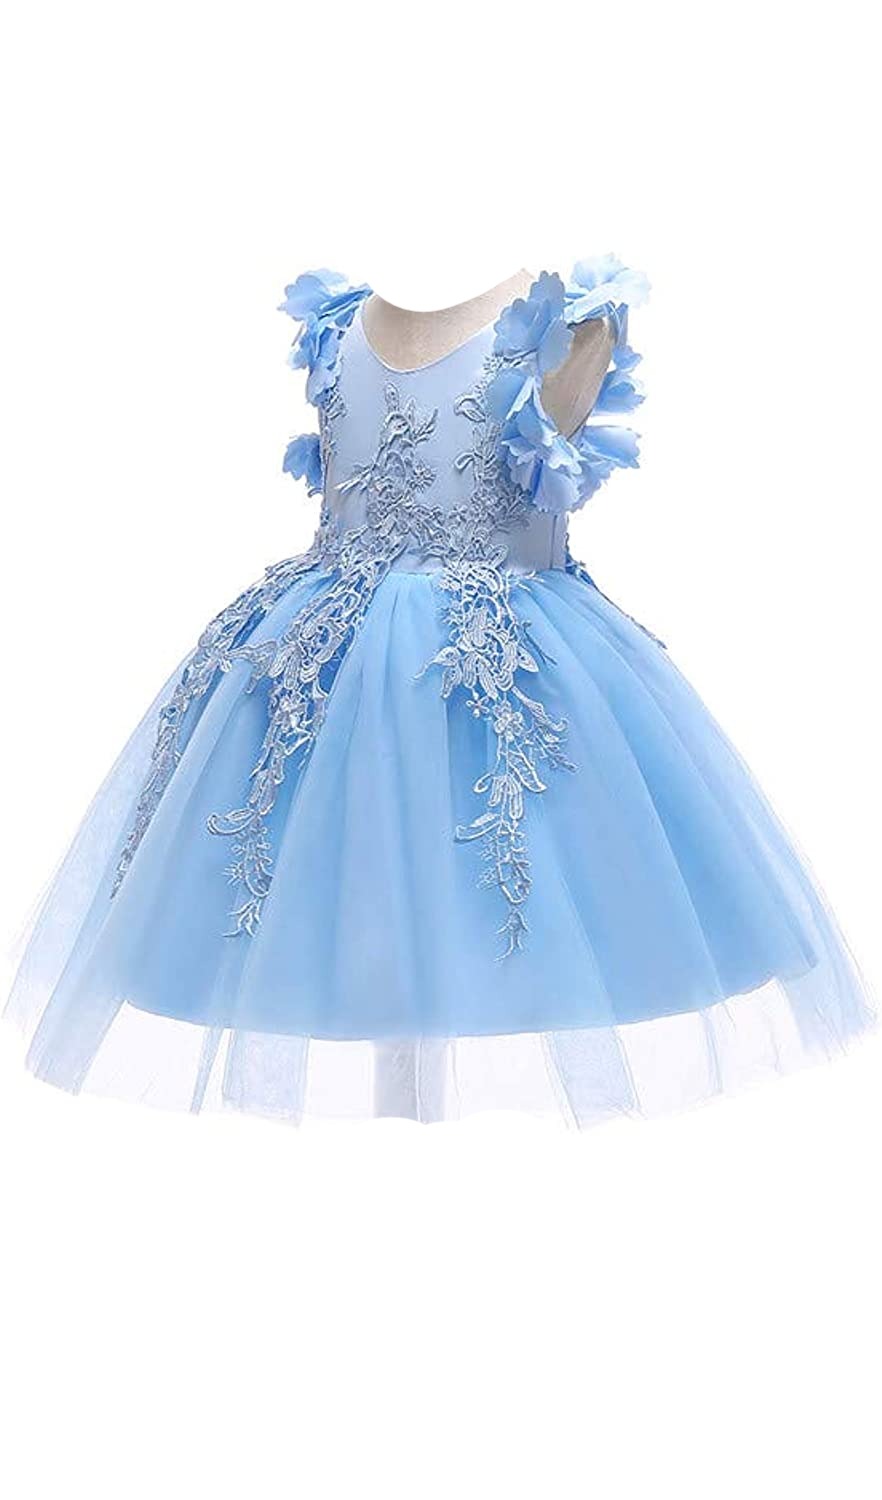 3D Butterfly Cuffs Blue Lace Tulle A-Line Flower Girl Dress